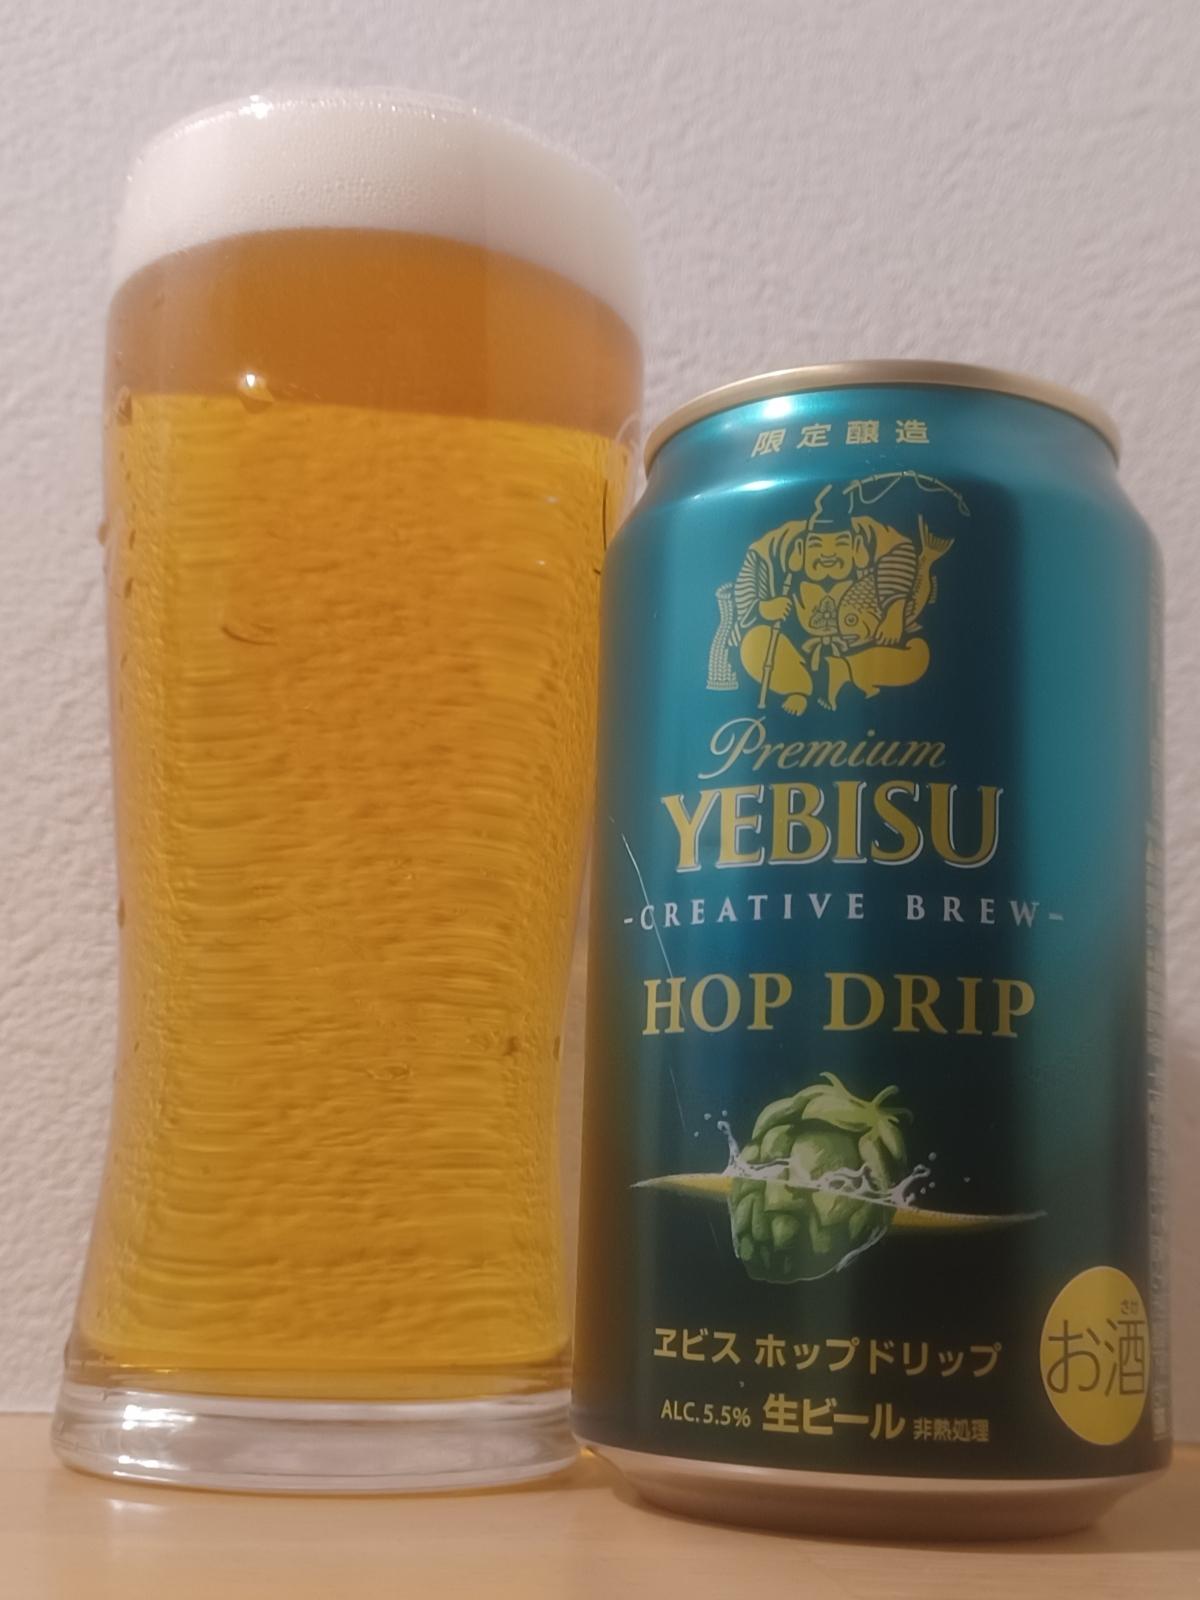 Premium Yebisu Creative Brew: Hop Drip